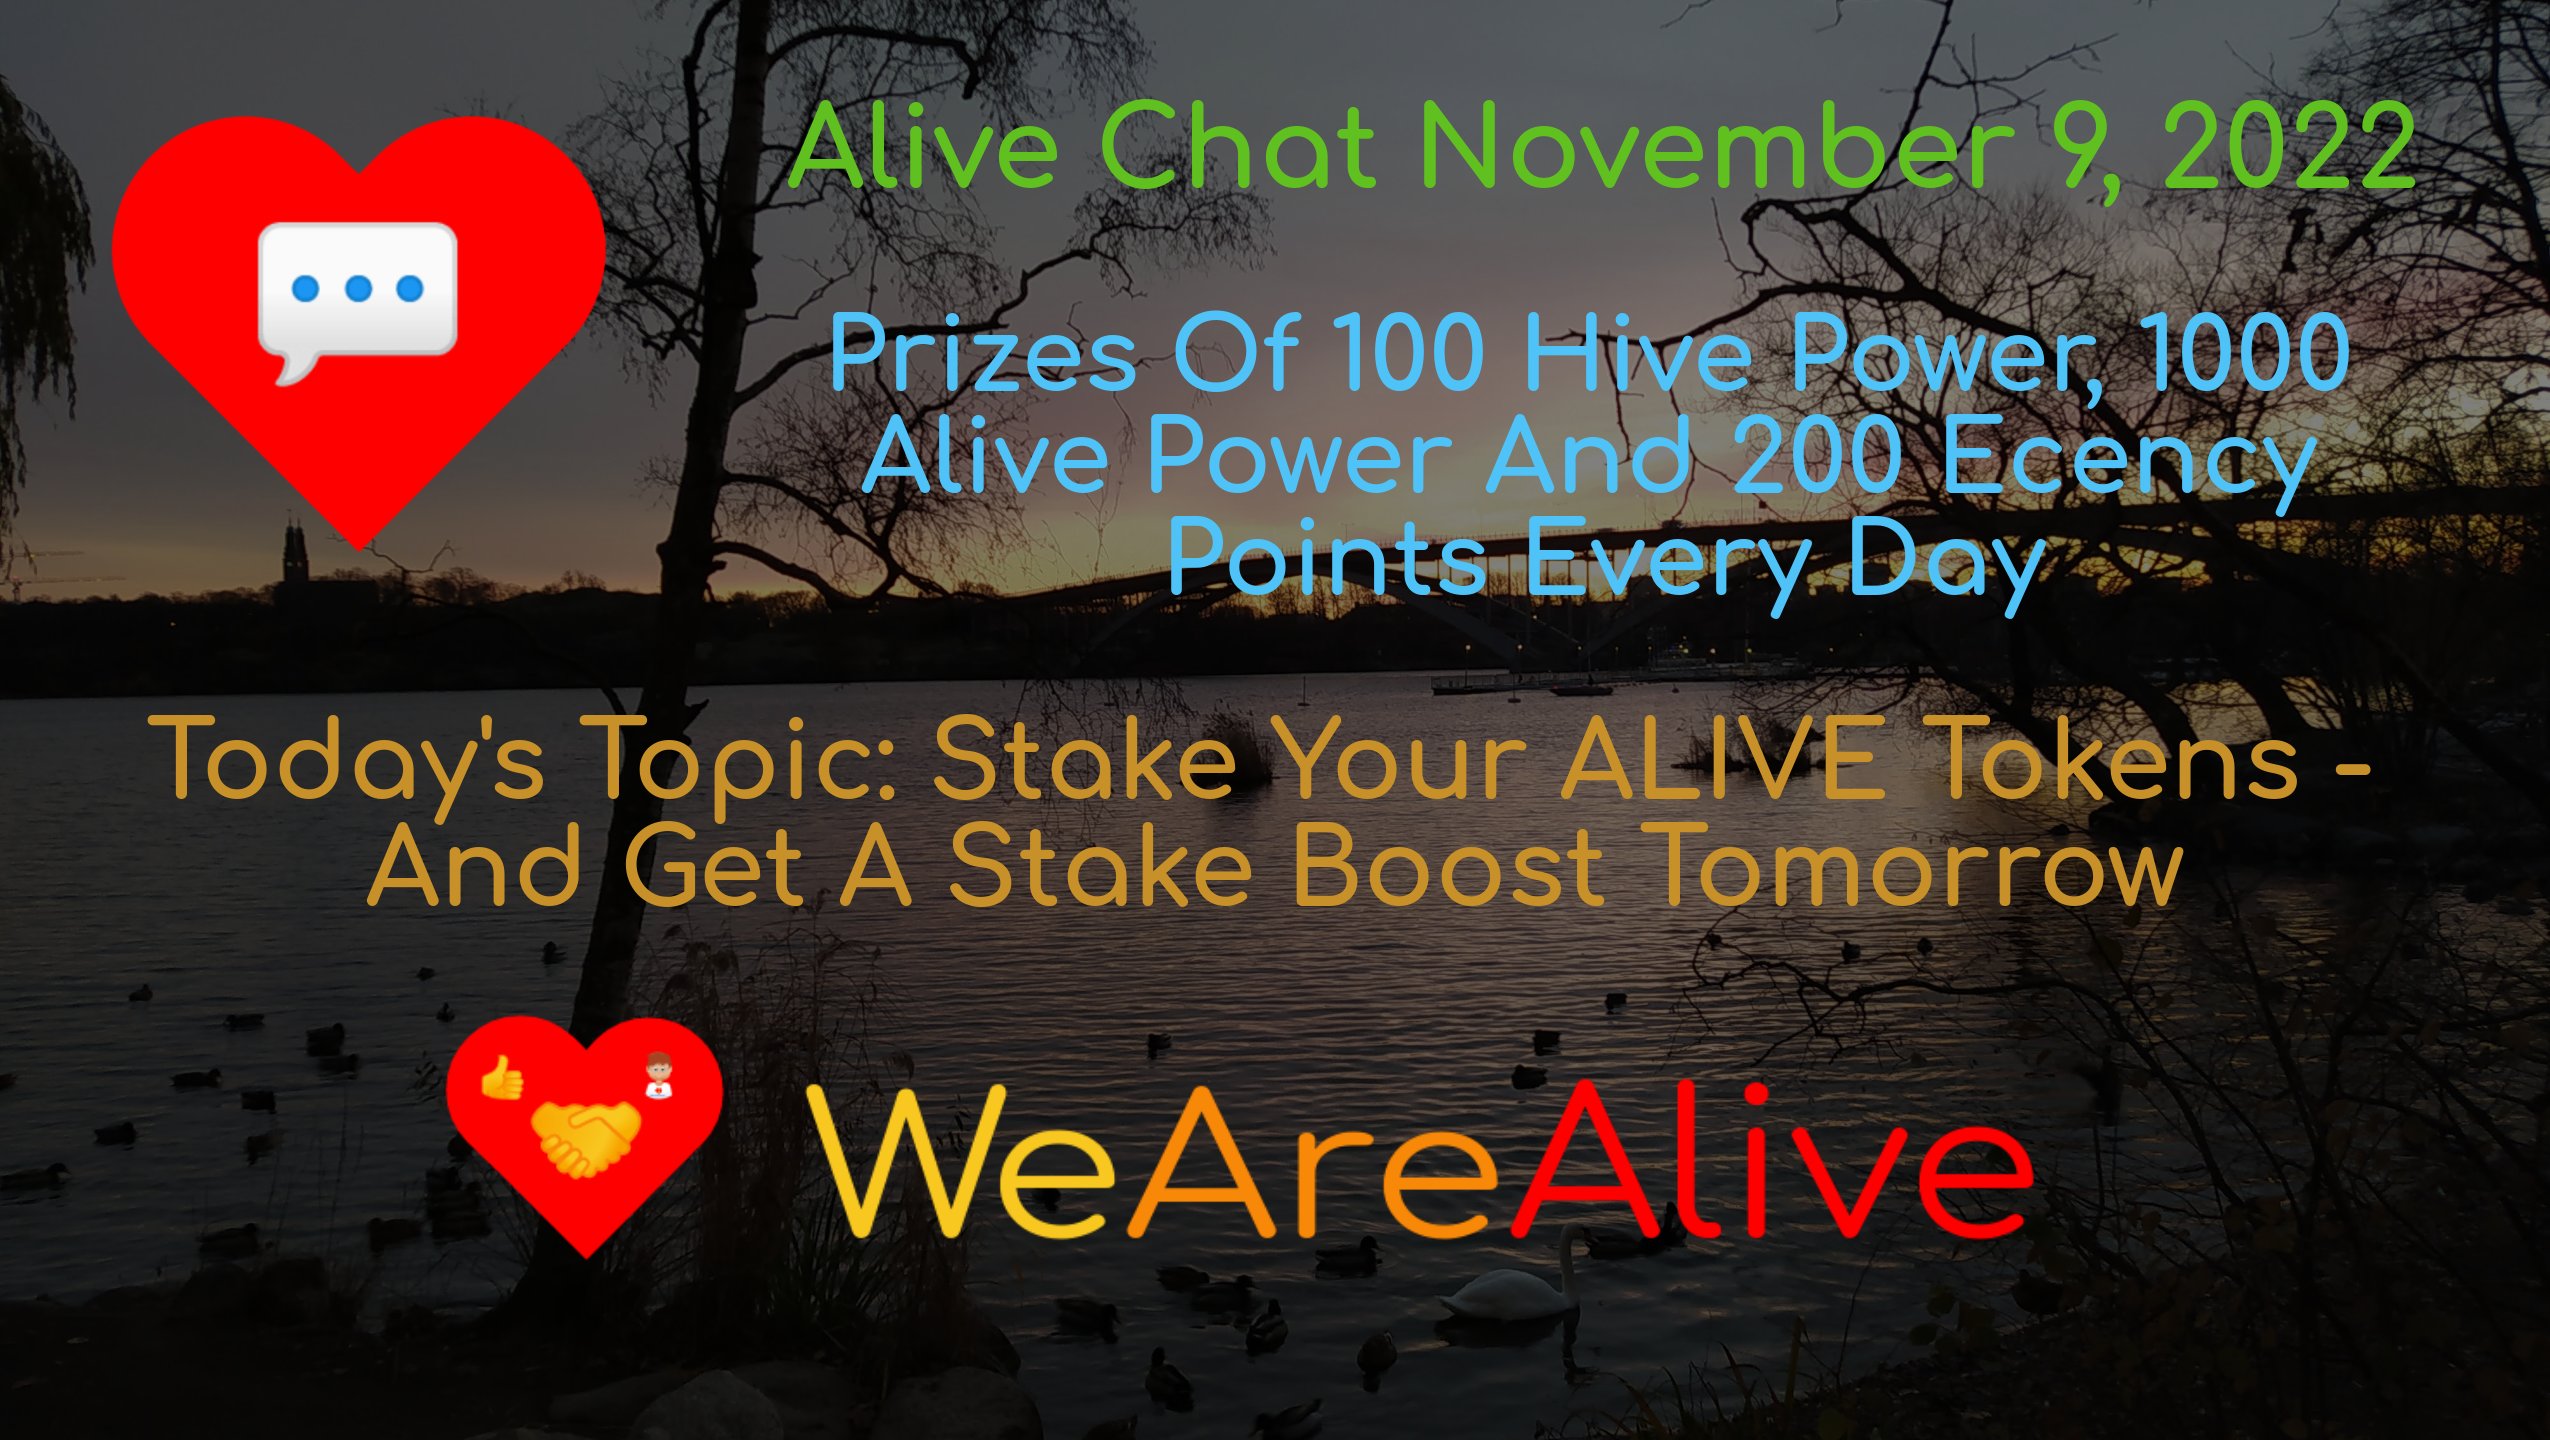 @alive.chat/alive-chat-november-9-2022